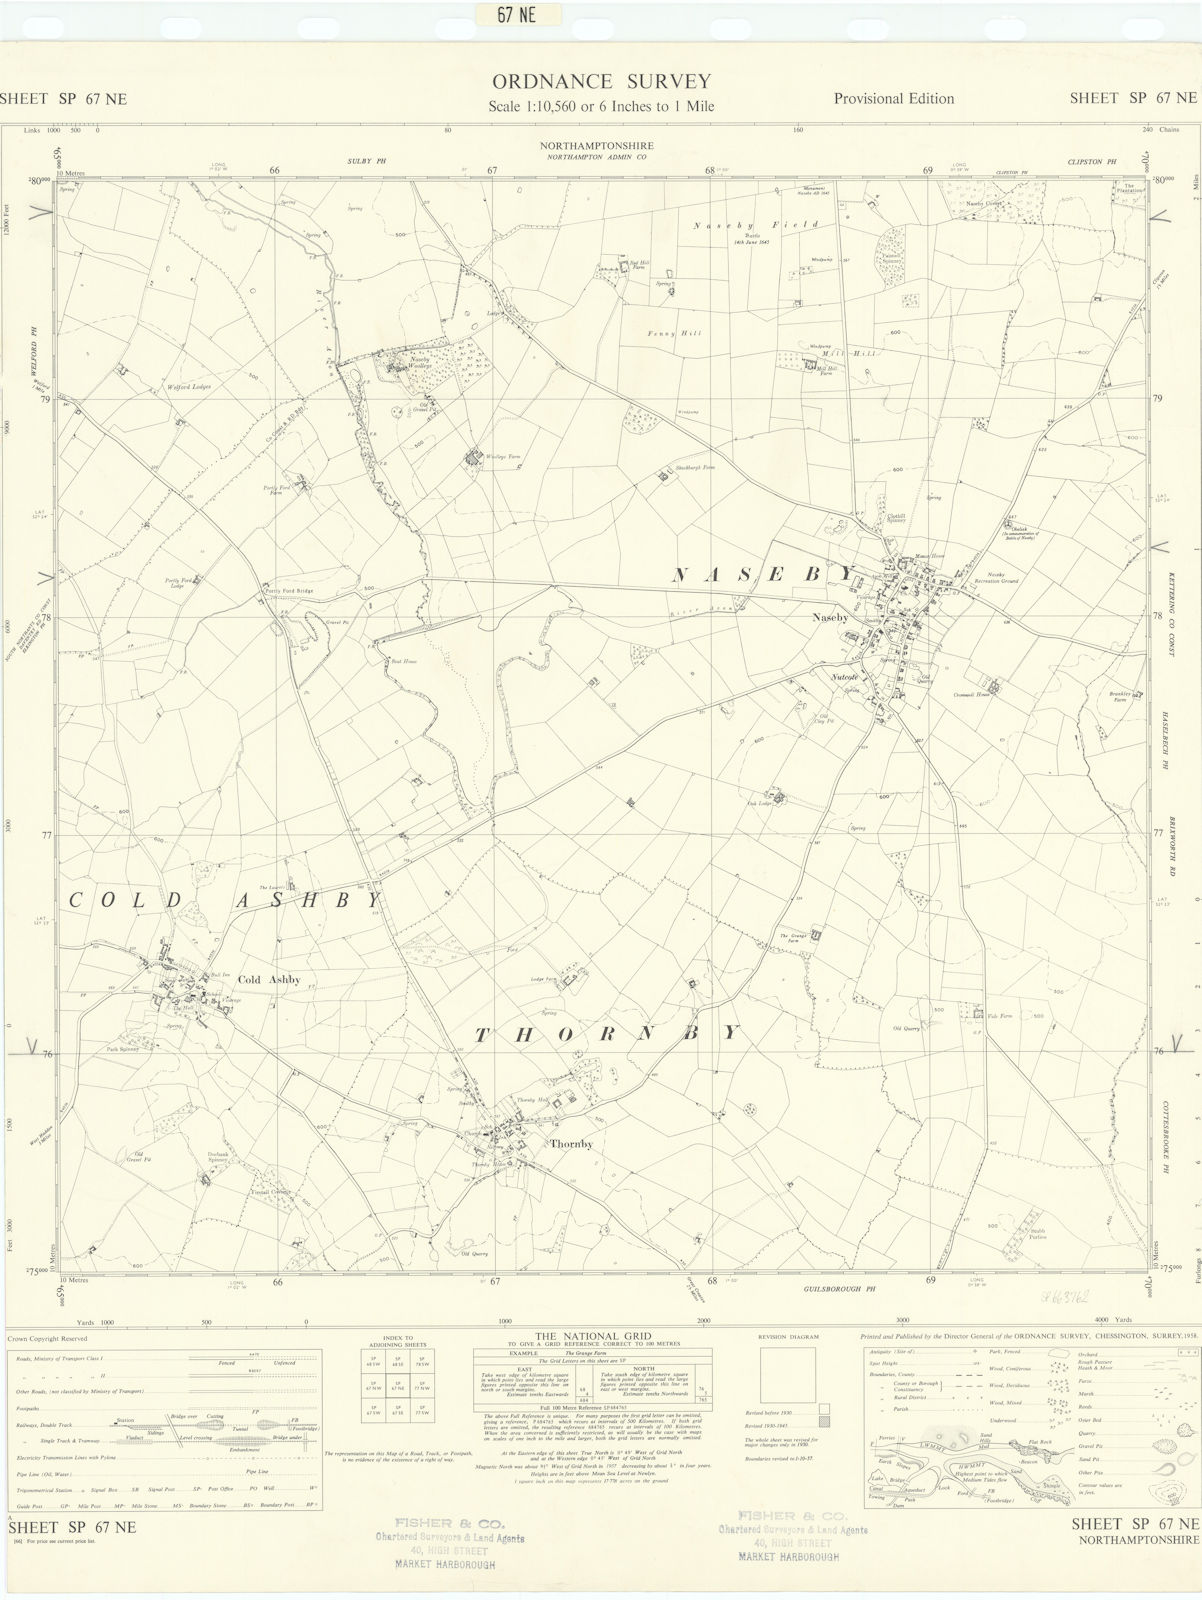 Ordnance Survey Sheet SP67NE Northamptonshire Naseby Cold Ashby Thornby 1958 map